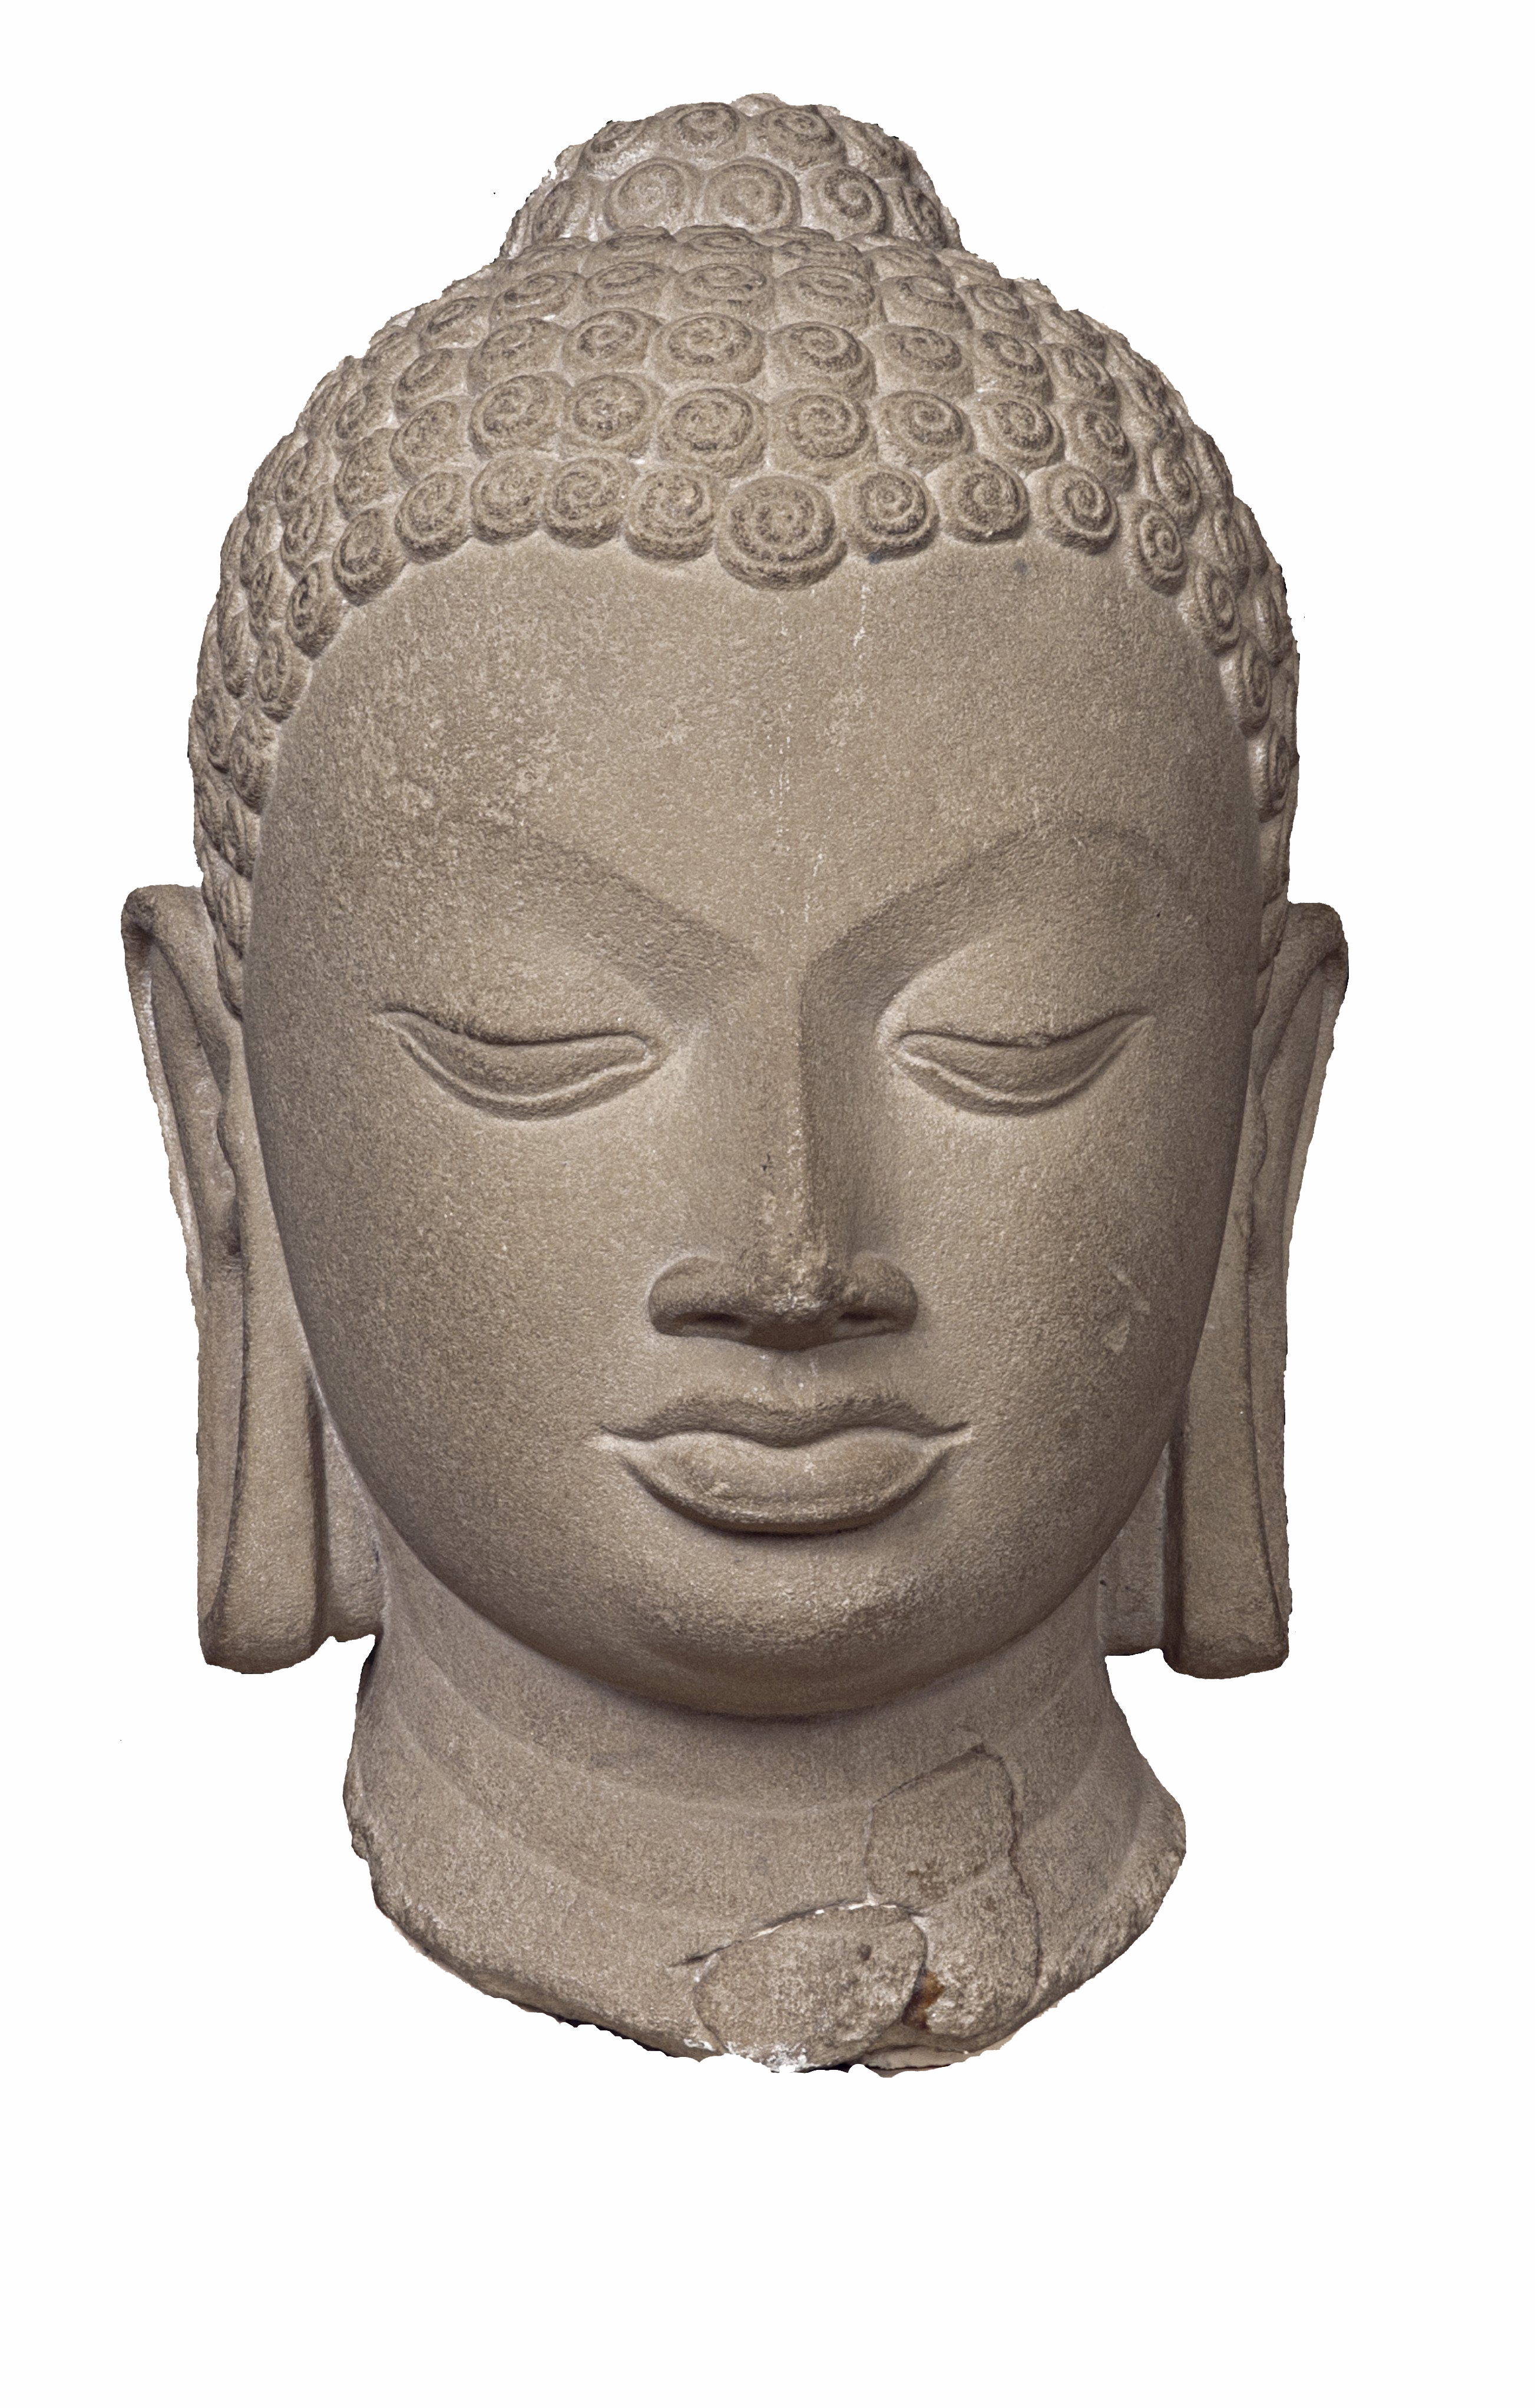 1599819165_Buddha Head.jpg